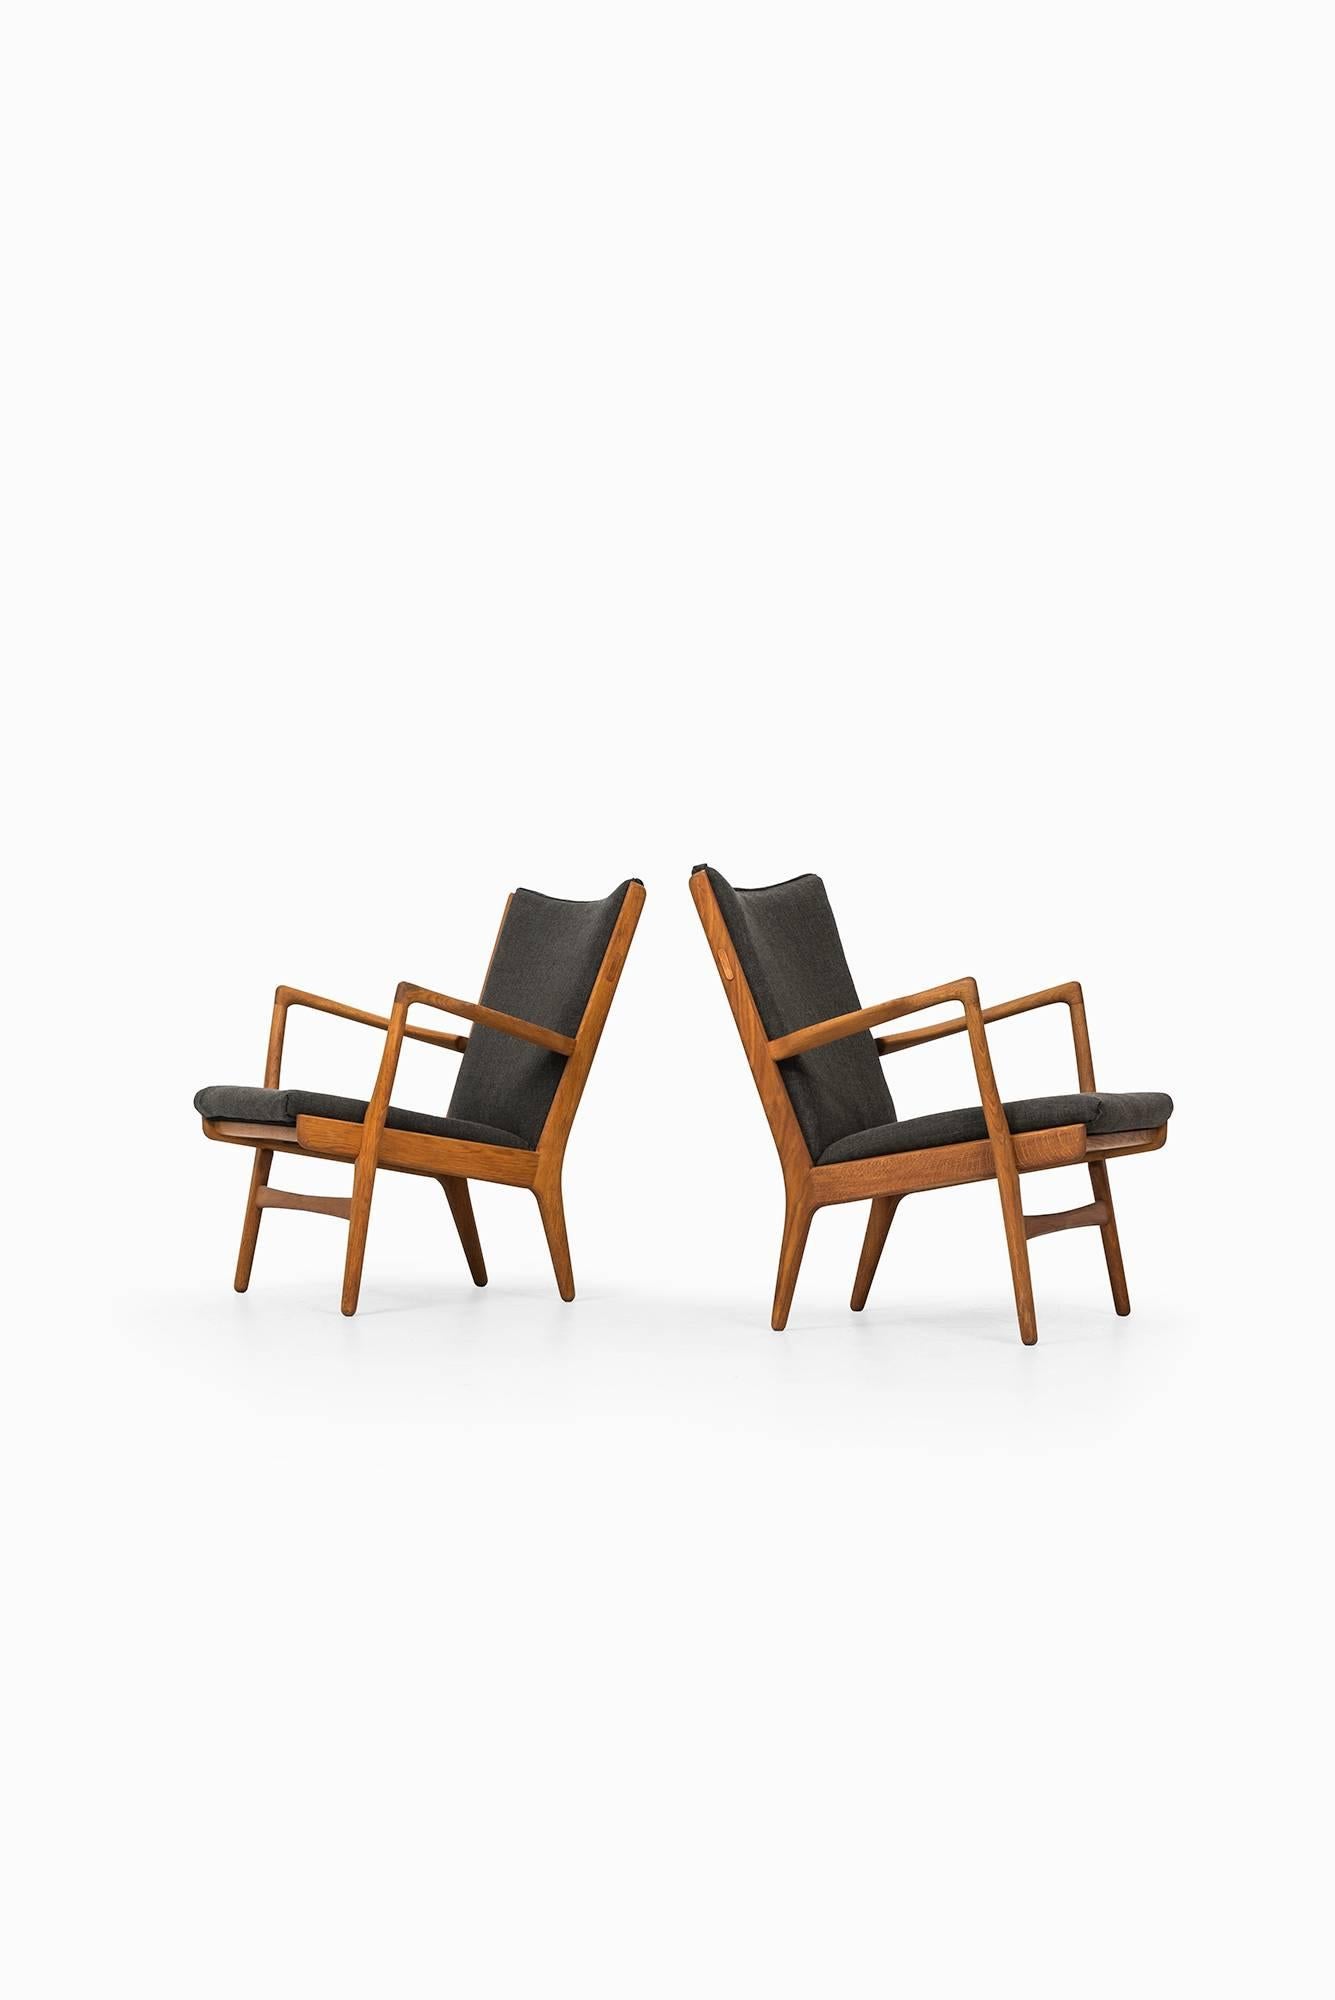 Mid-20th Century Hans Wegner Easy Chairs Model AP-16 by AP-Stolen in Denmark